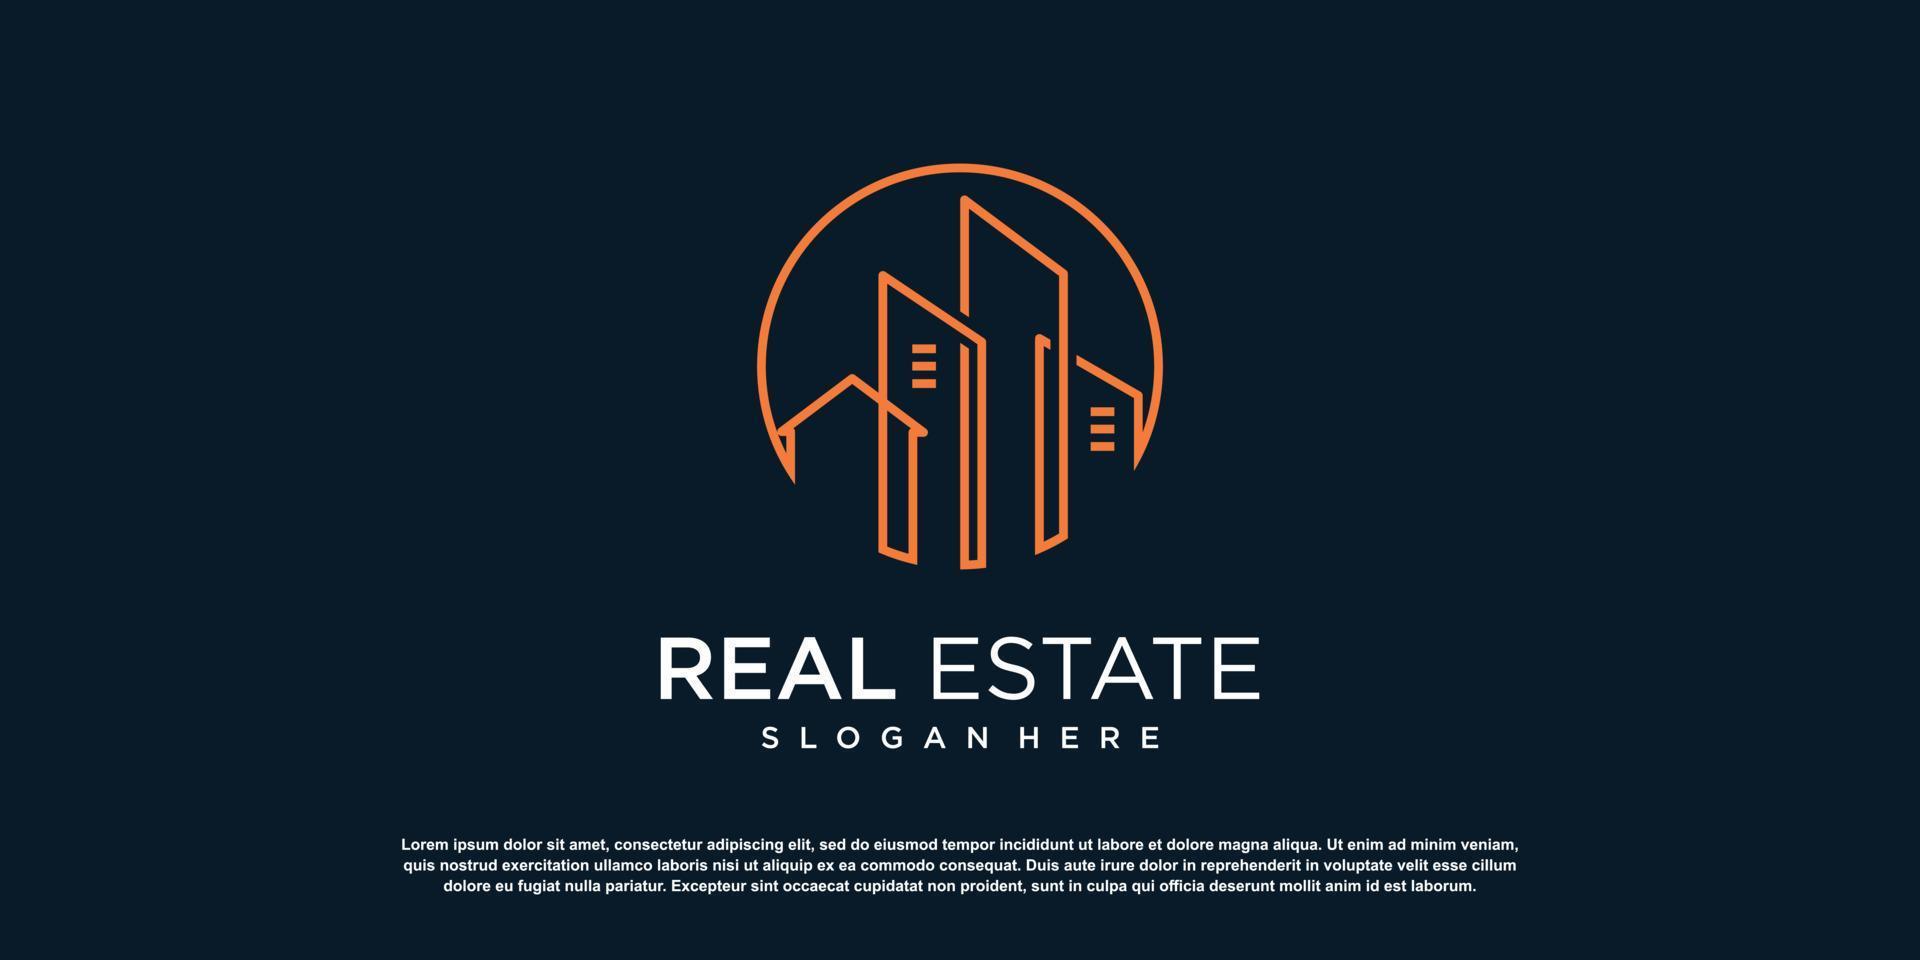 Real estate logo design with creative unique style Premium Vector